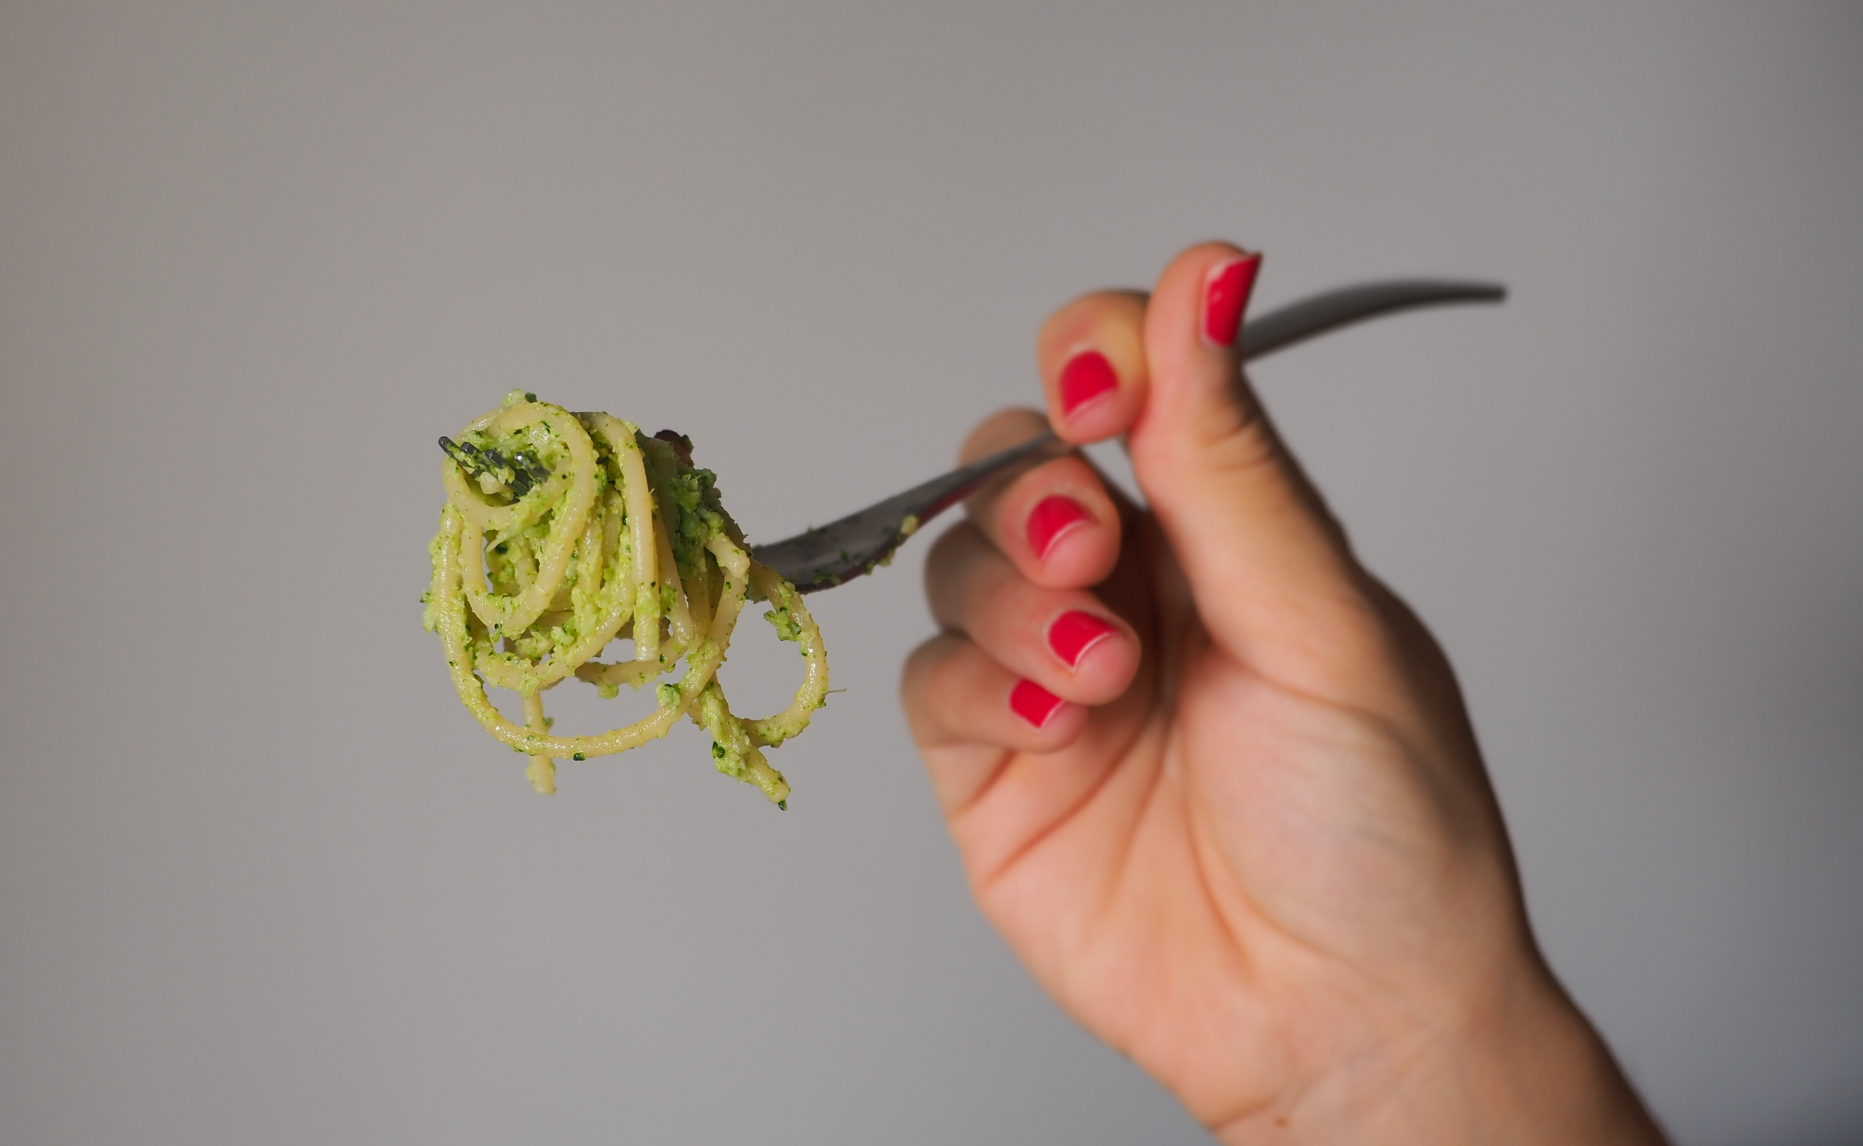 Pesto végétal aux brocolis